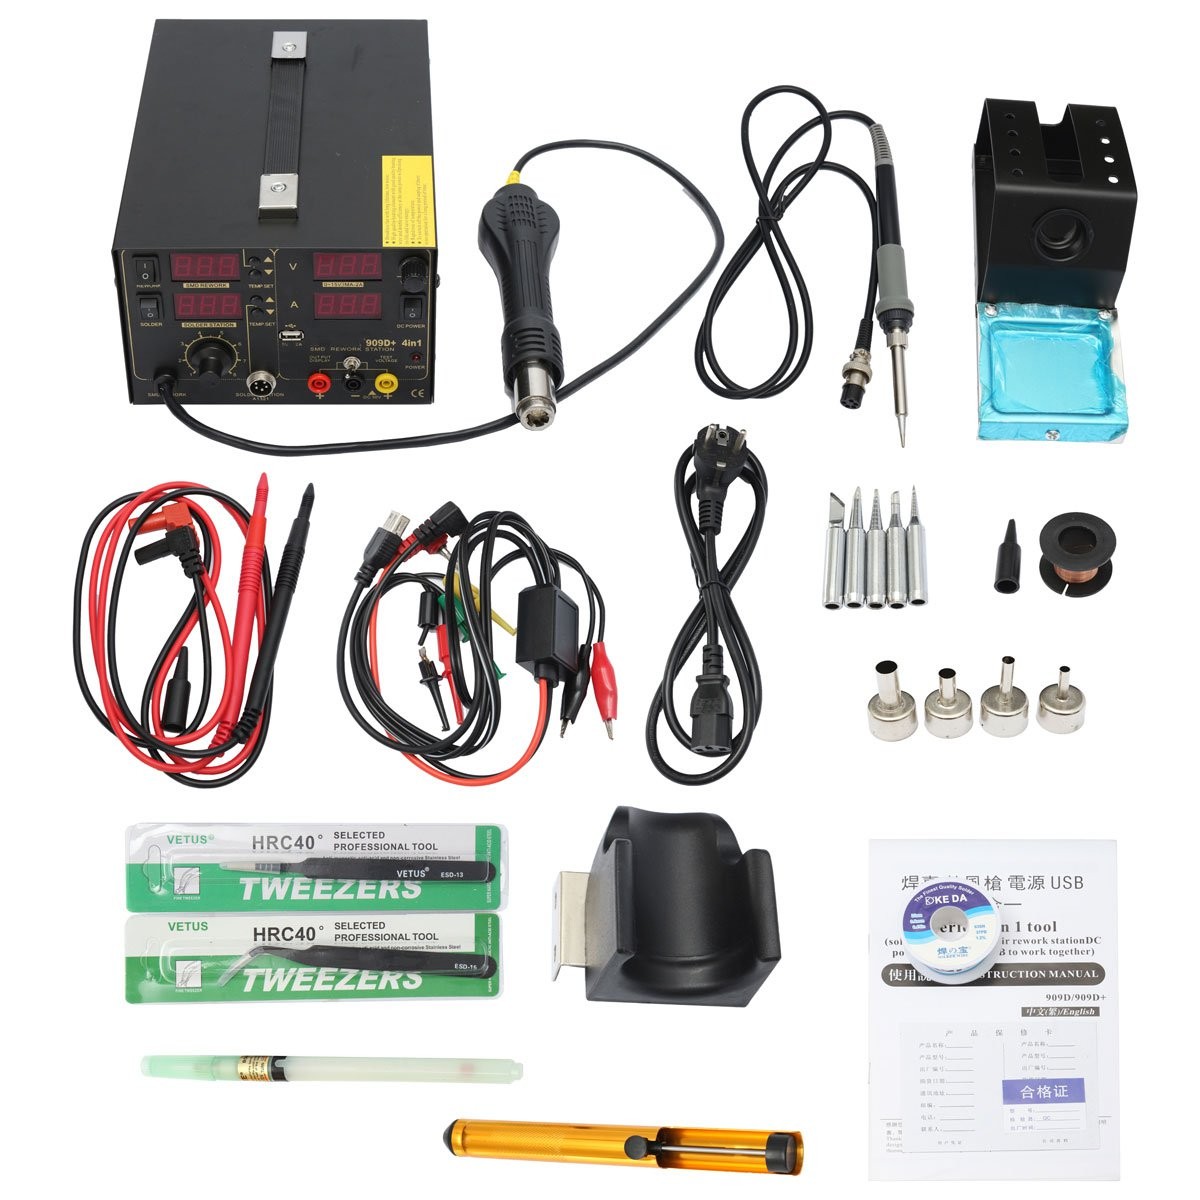 Saike-110V-AC-909D-Rework-Soldering-Station-Hot-Heat-Air-Nozzle-DC-USB-Power-Supply-US-Plug-1090753-1